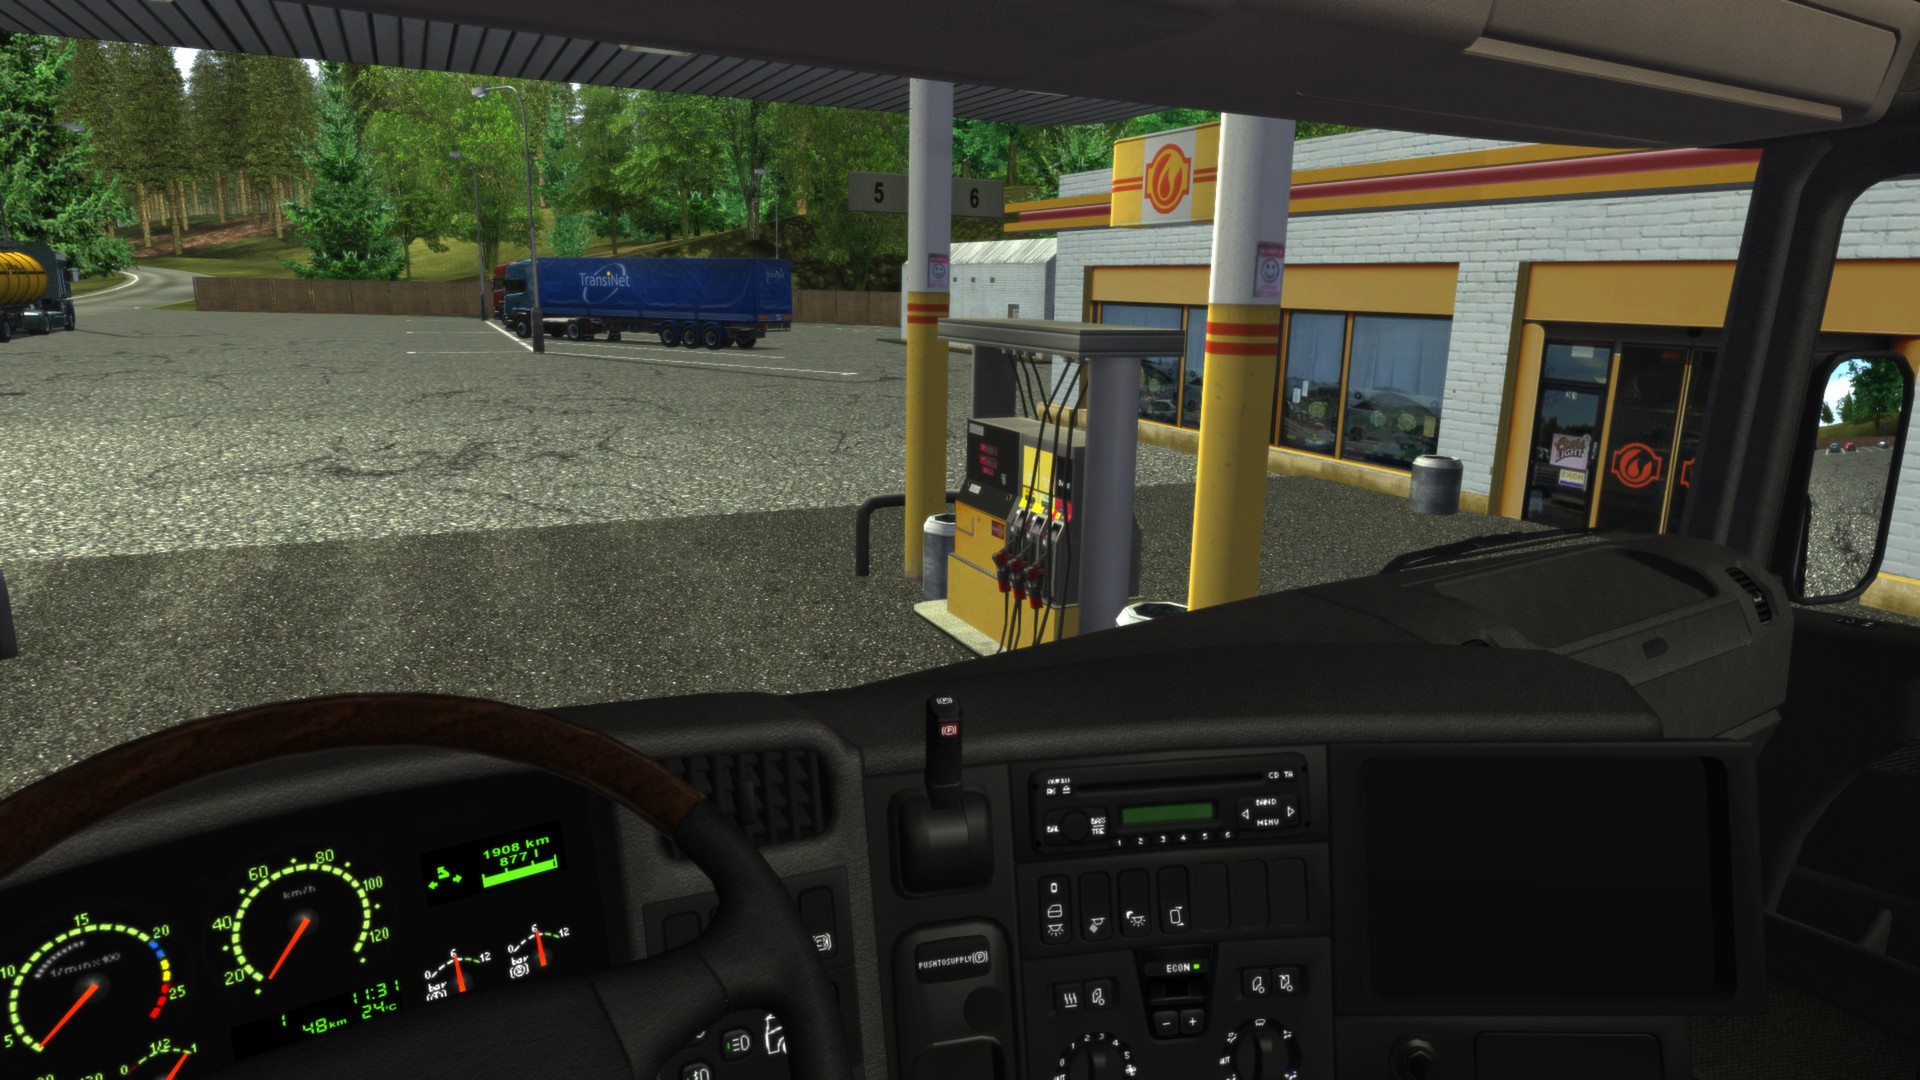 euro truck simulator 1 videos